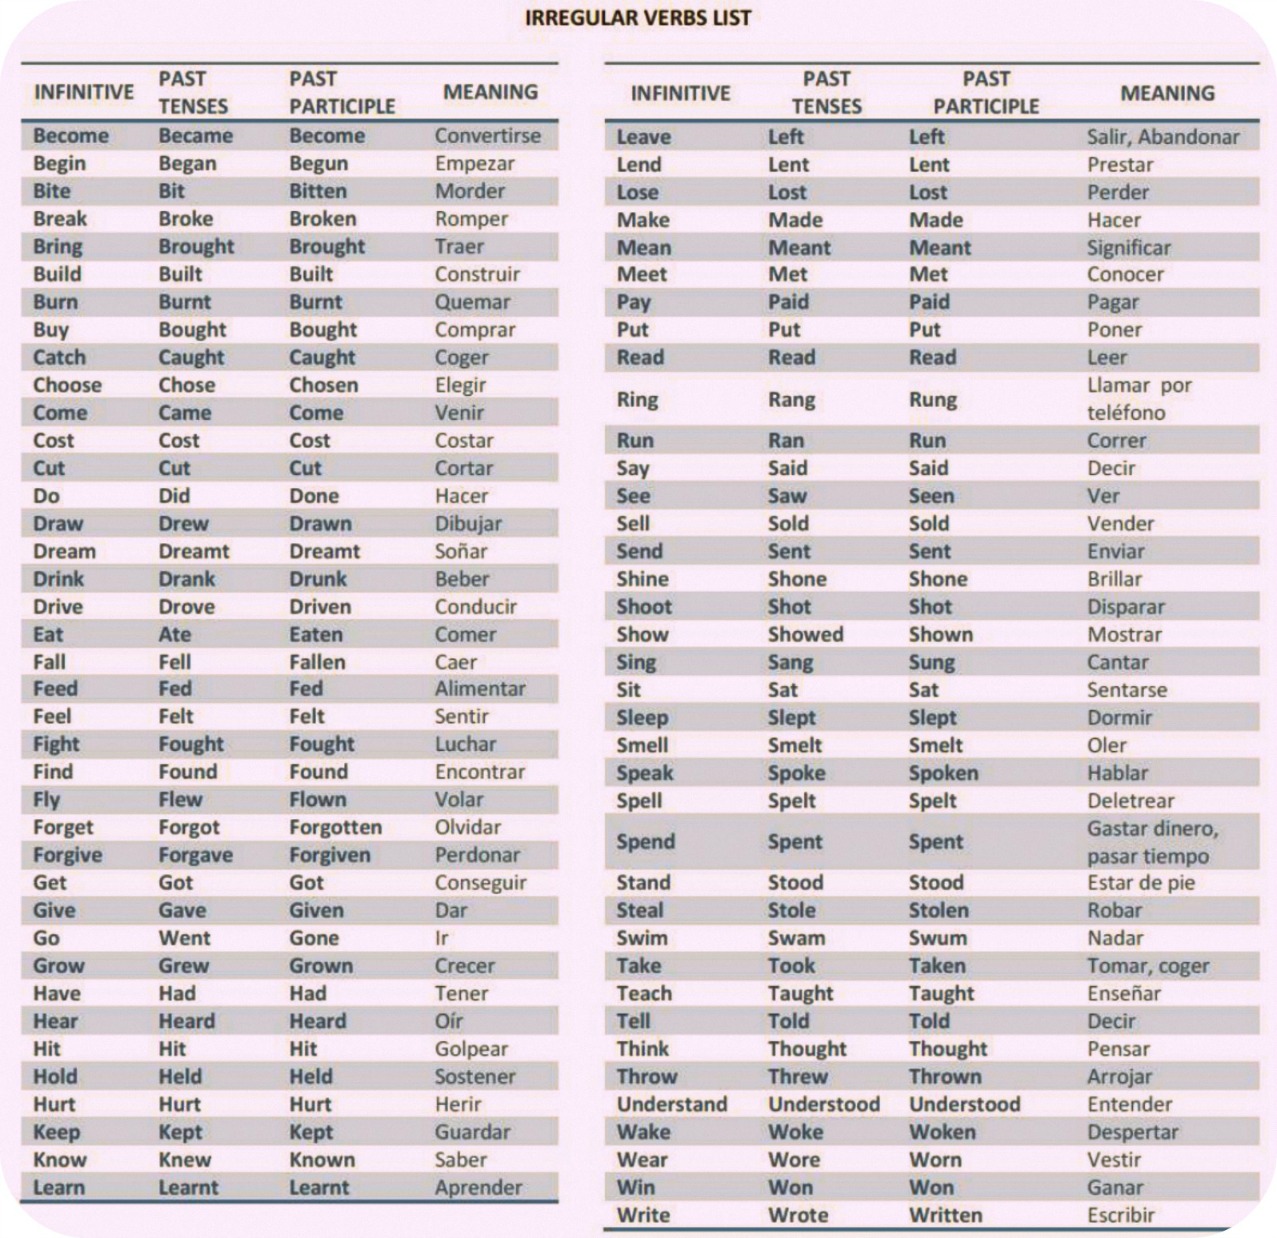 Пить формы глагола. Past simple таблица неправильных глаголов. Неправильные глаголы паст Симпл. Таблица паст Симпл таблица неправильных глаголов. List of Irregular verbs таблица.